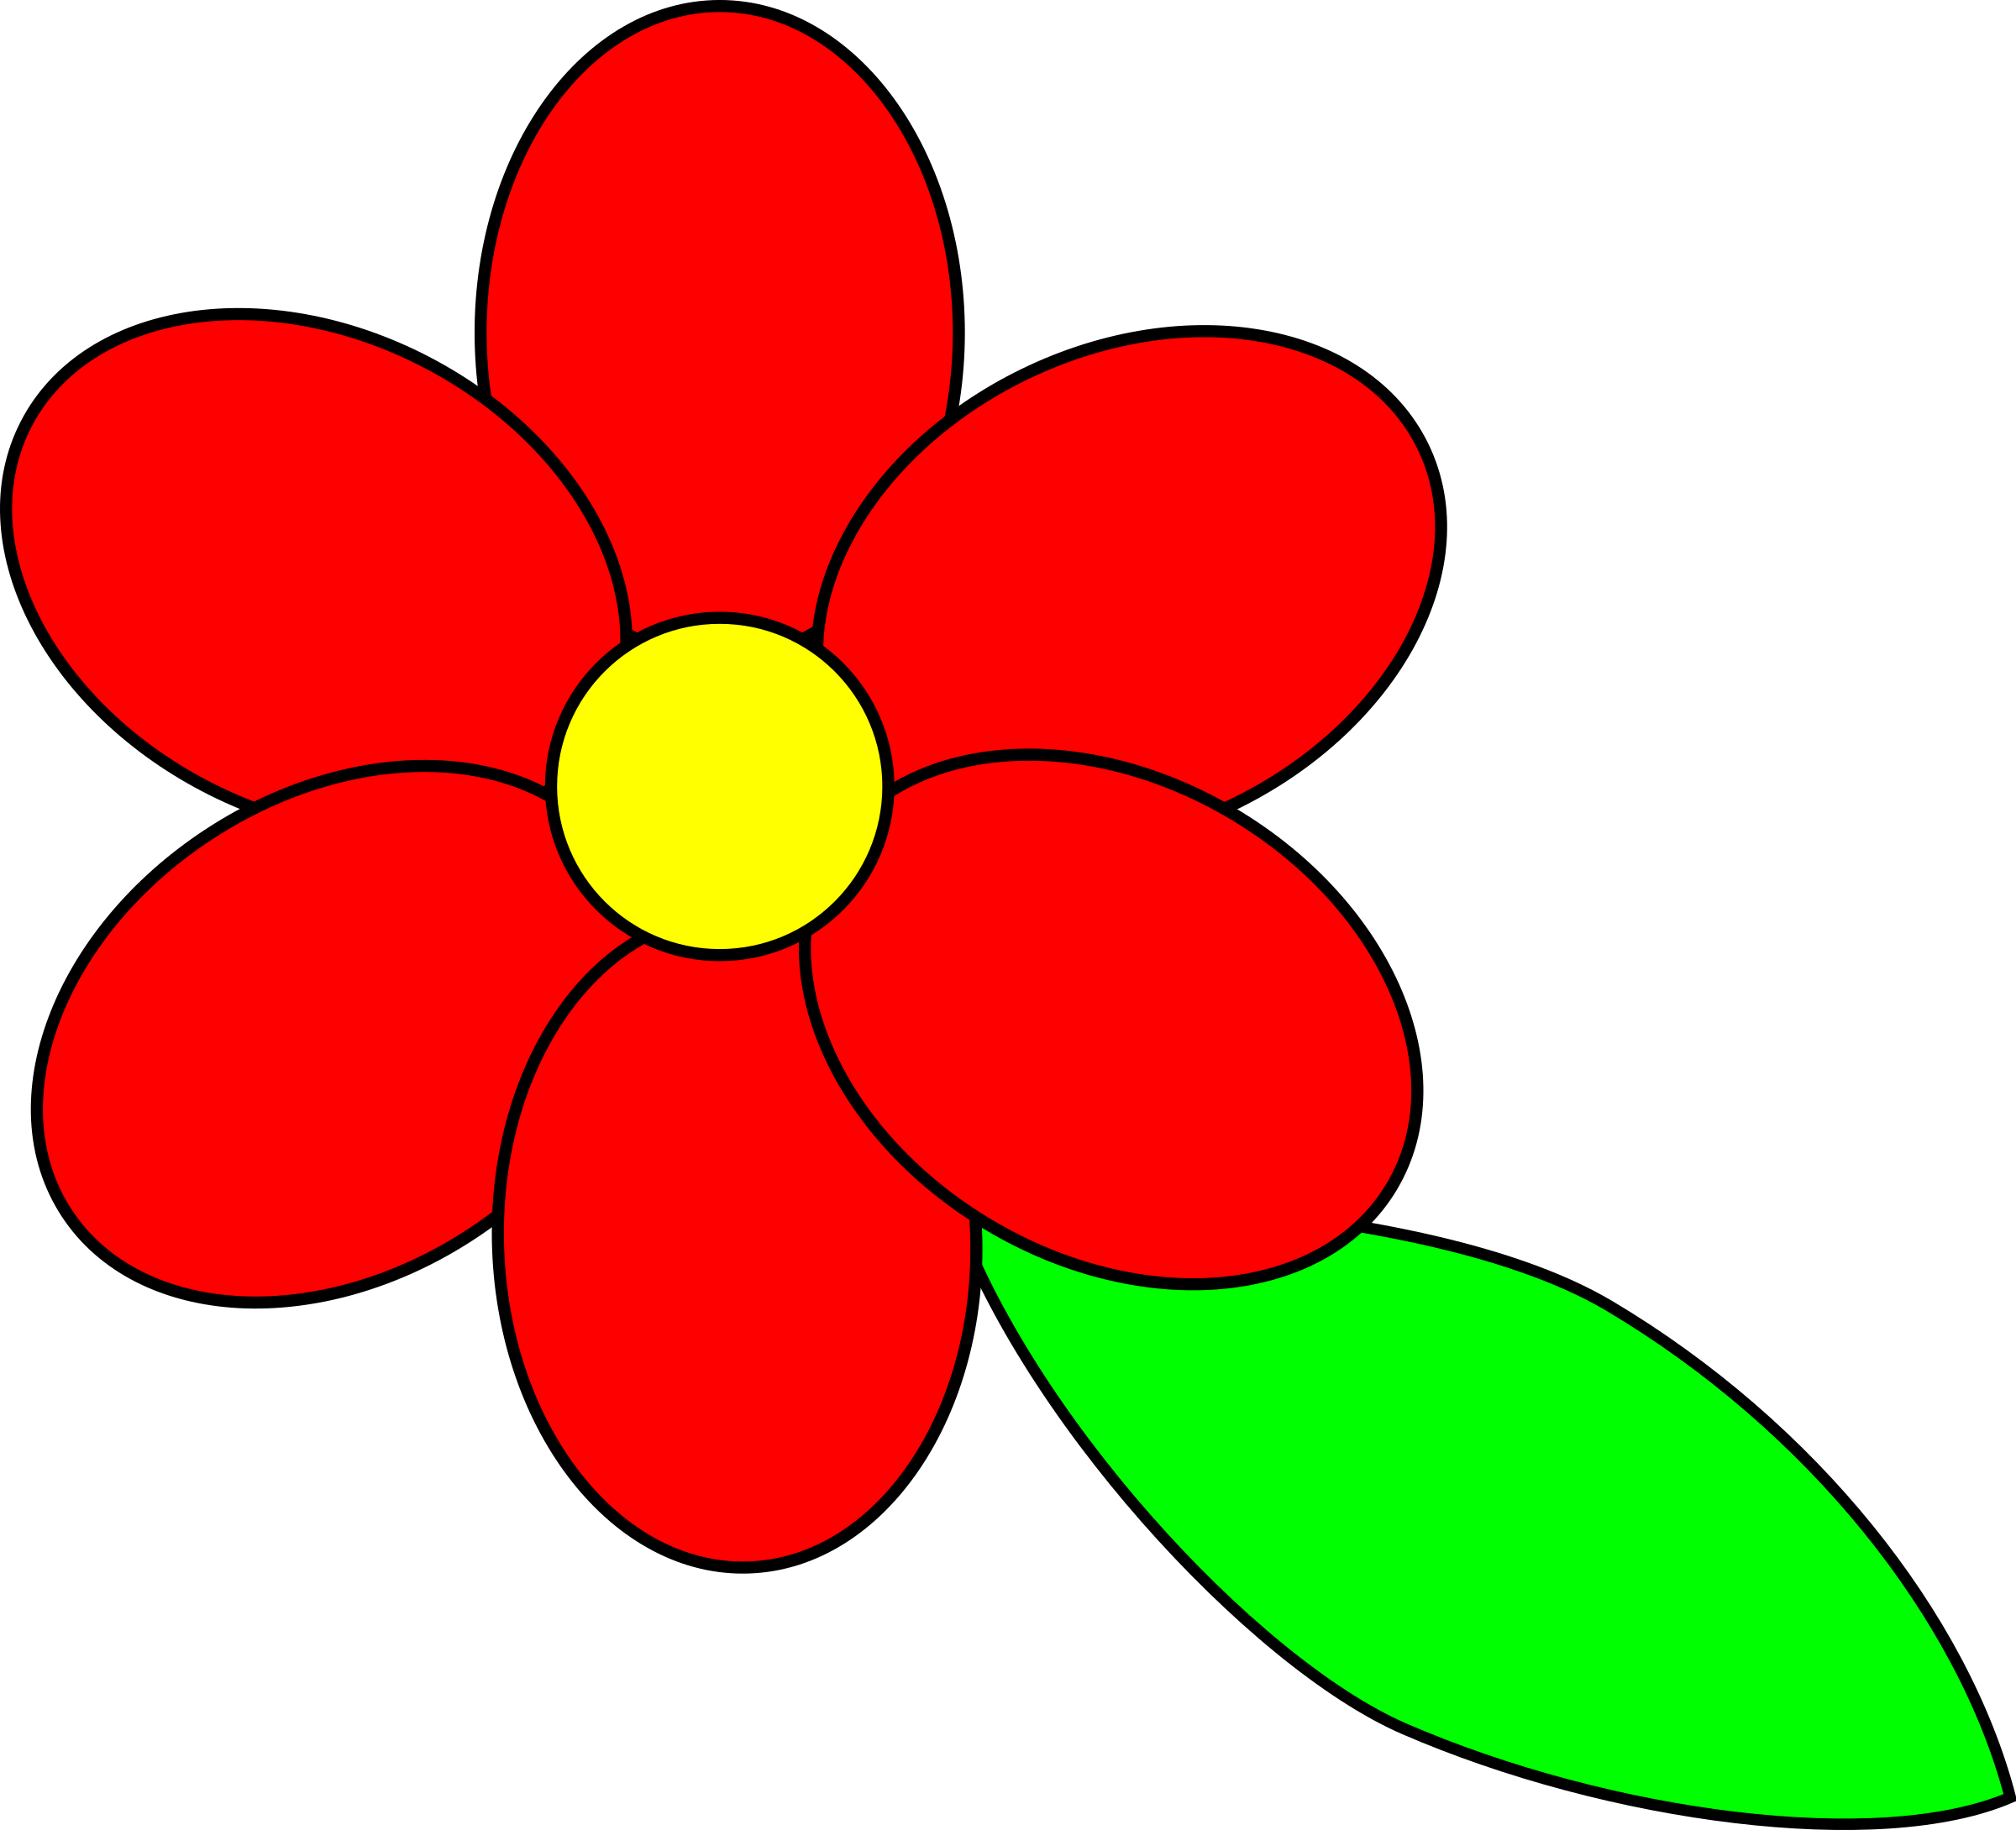 Green Flower with Red Petal Logo - Clipart - Flower six red petals black outline green leaf